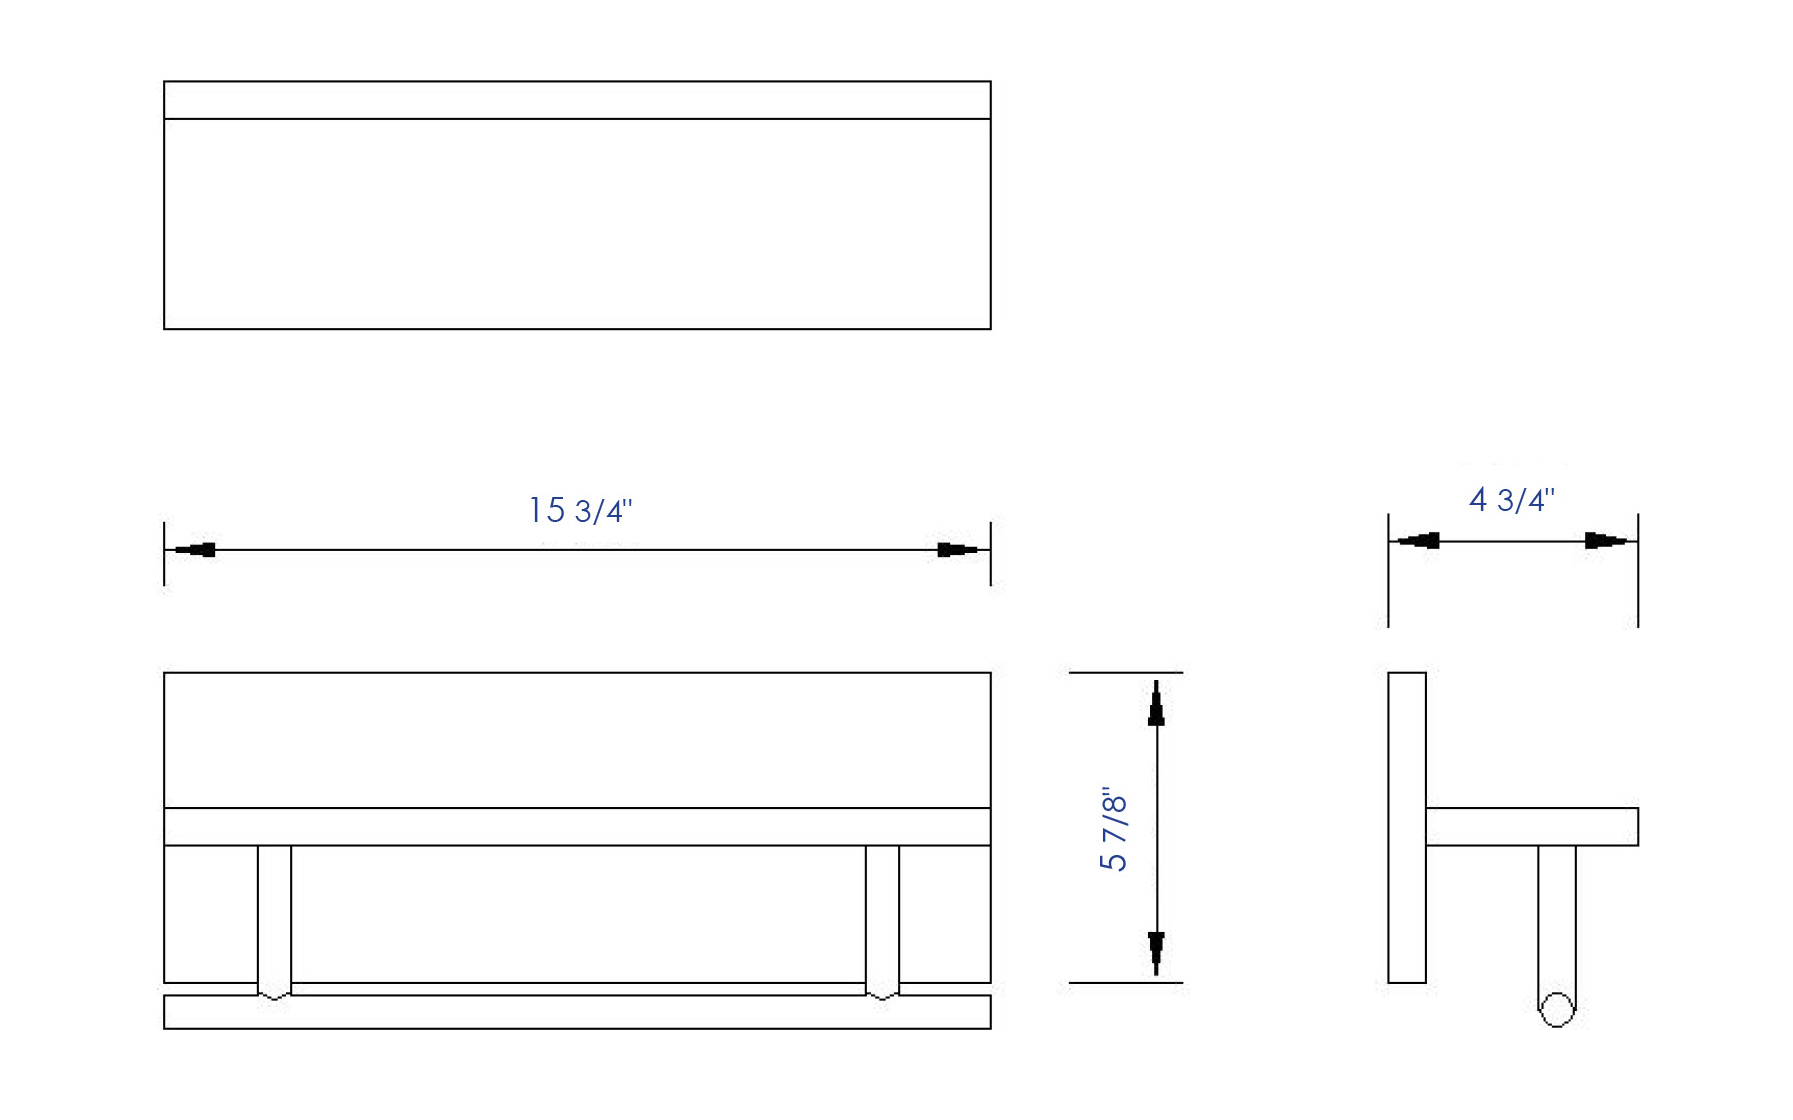 ALFI Brand - 16" Wooden Shelf with Chrome Towel Bar Bathroom Accessory | AB5511